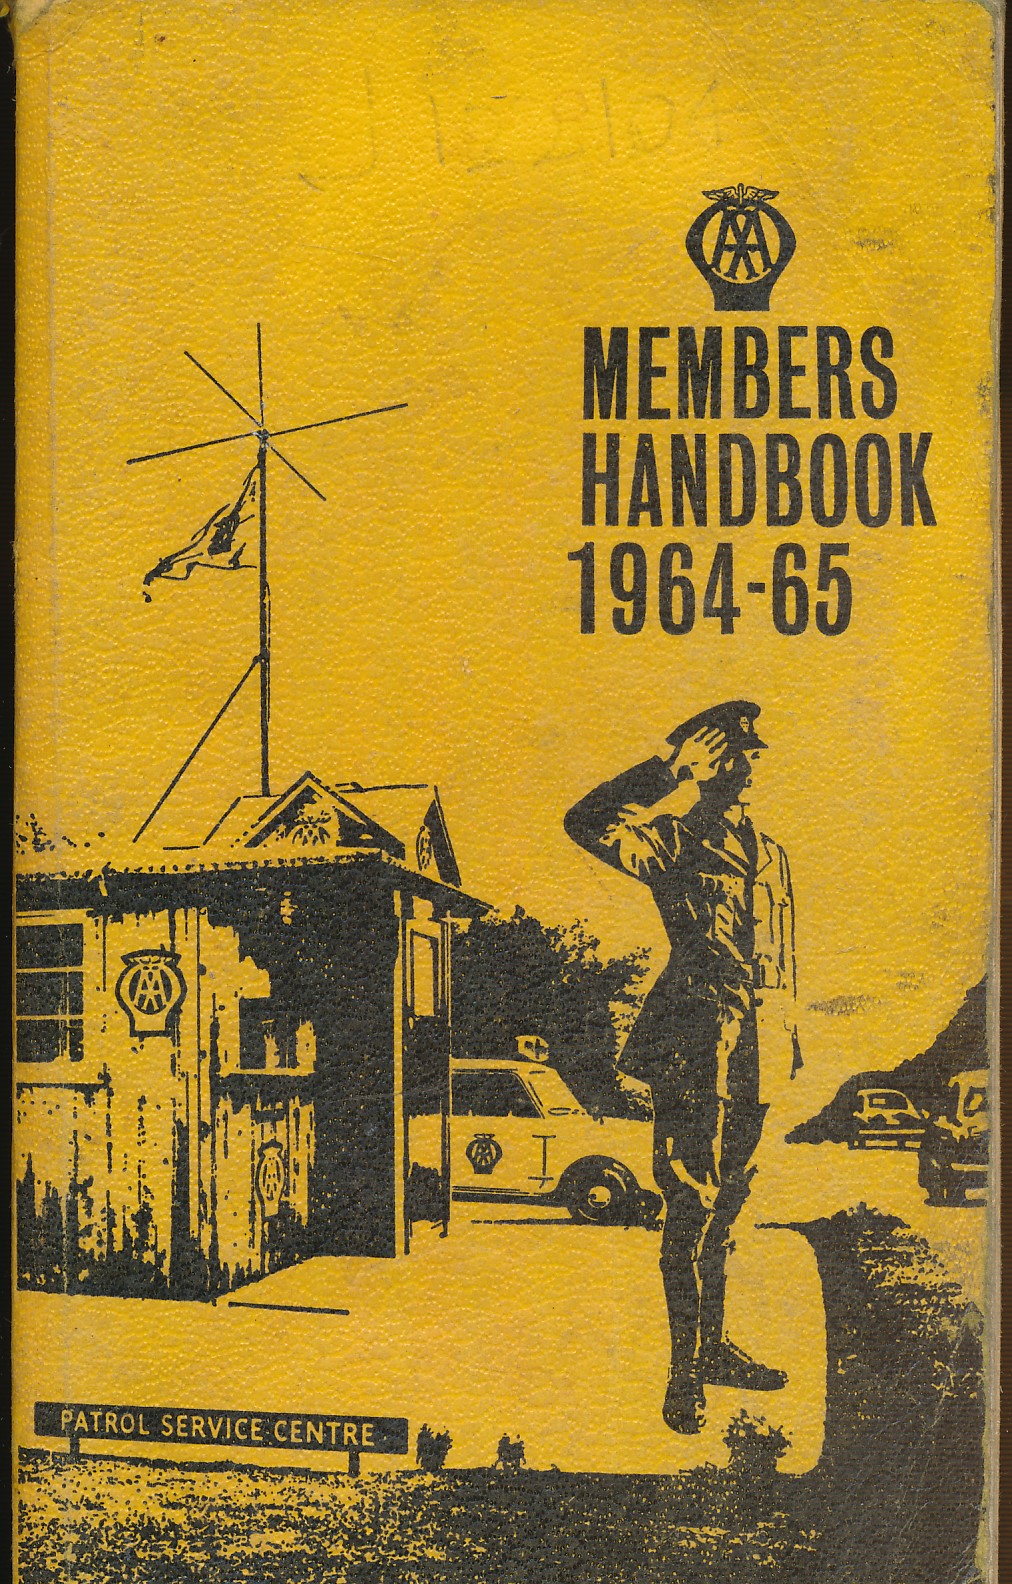 AA Members Handbook 1964-65